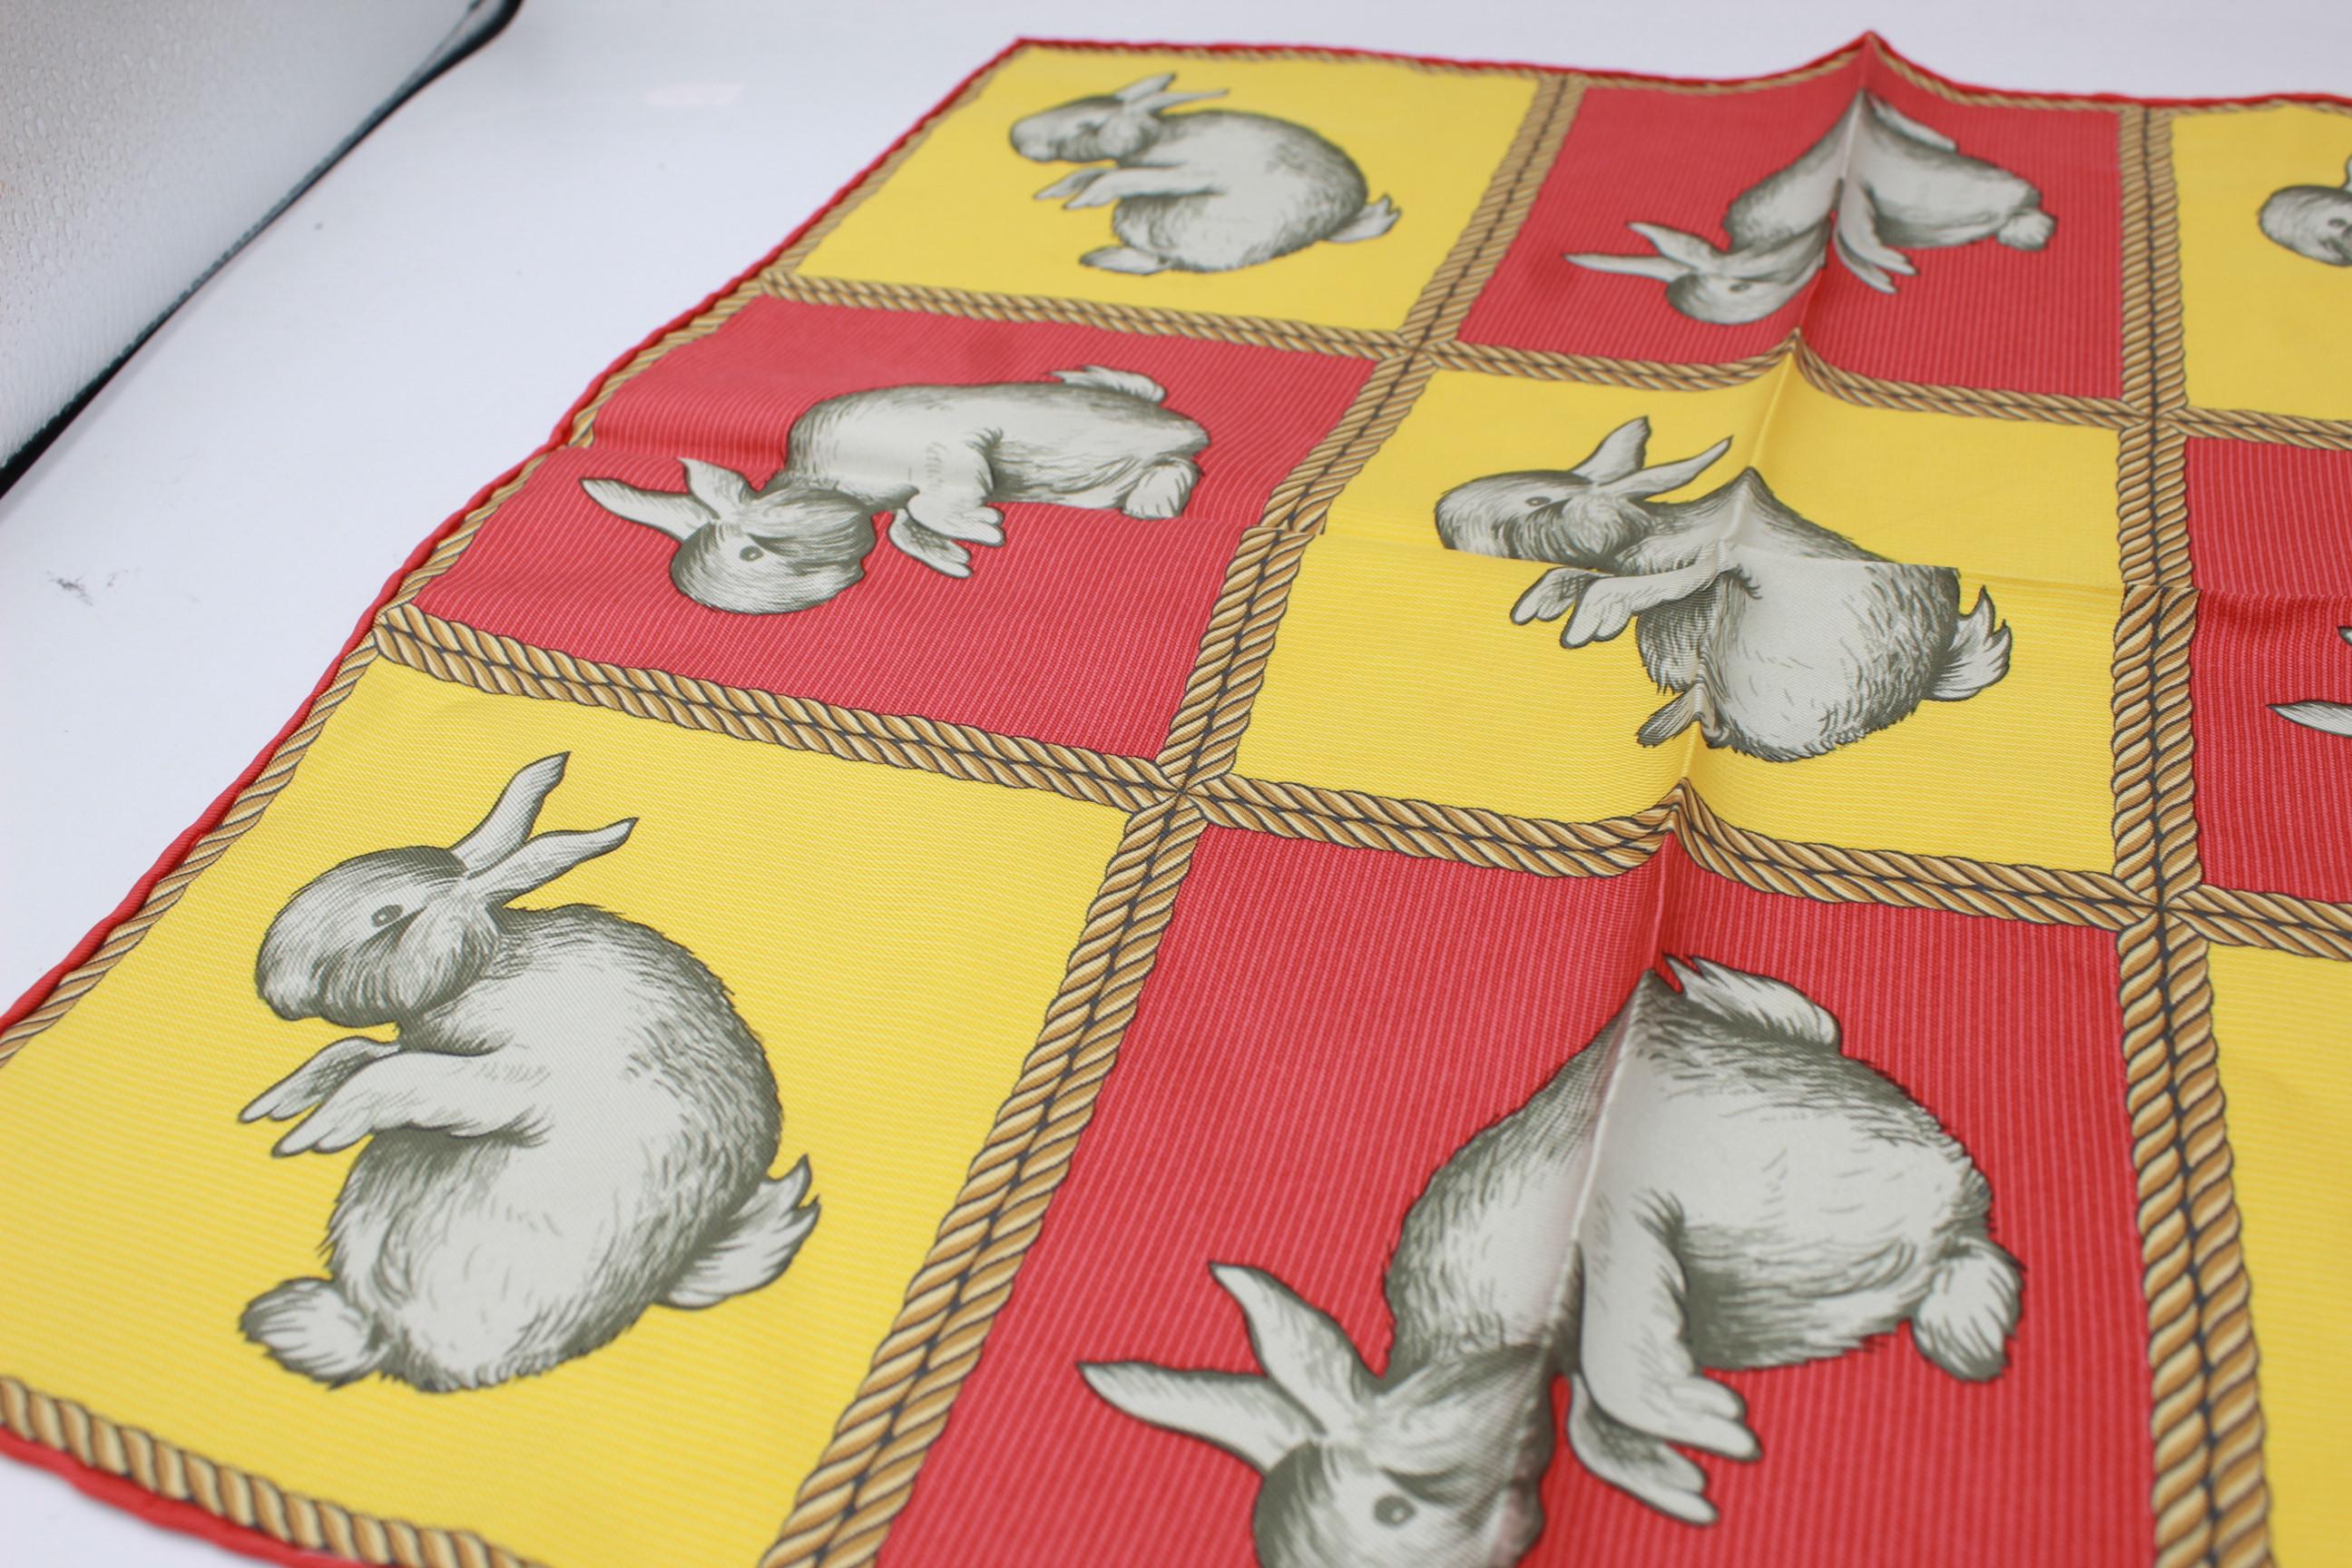 Hermès scarf « carré » rabbit print.
In silk.
From Sales.
Good condition.
40cm x 40cm